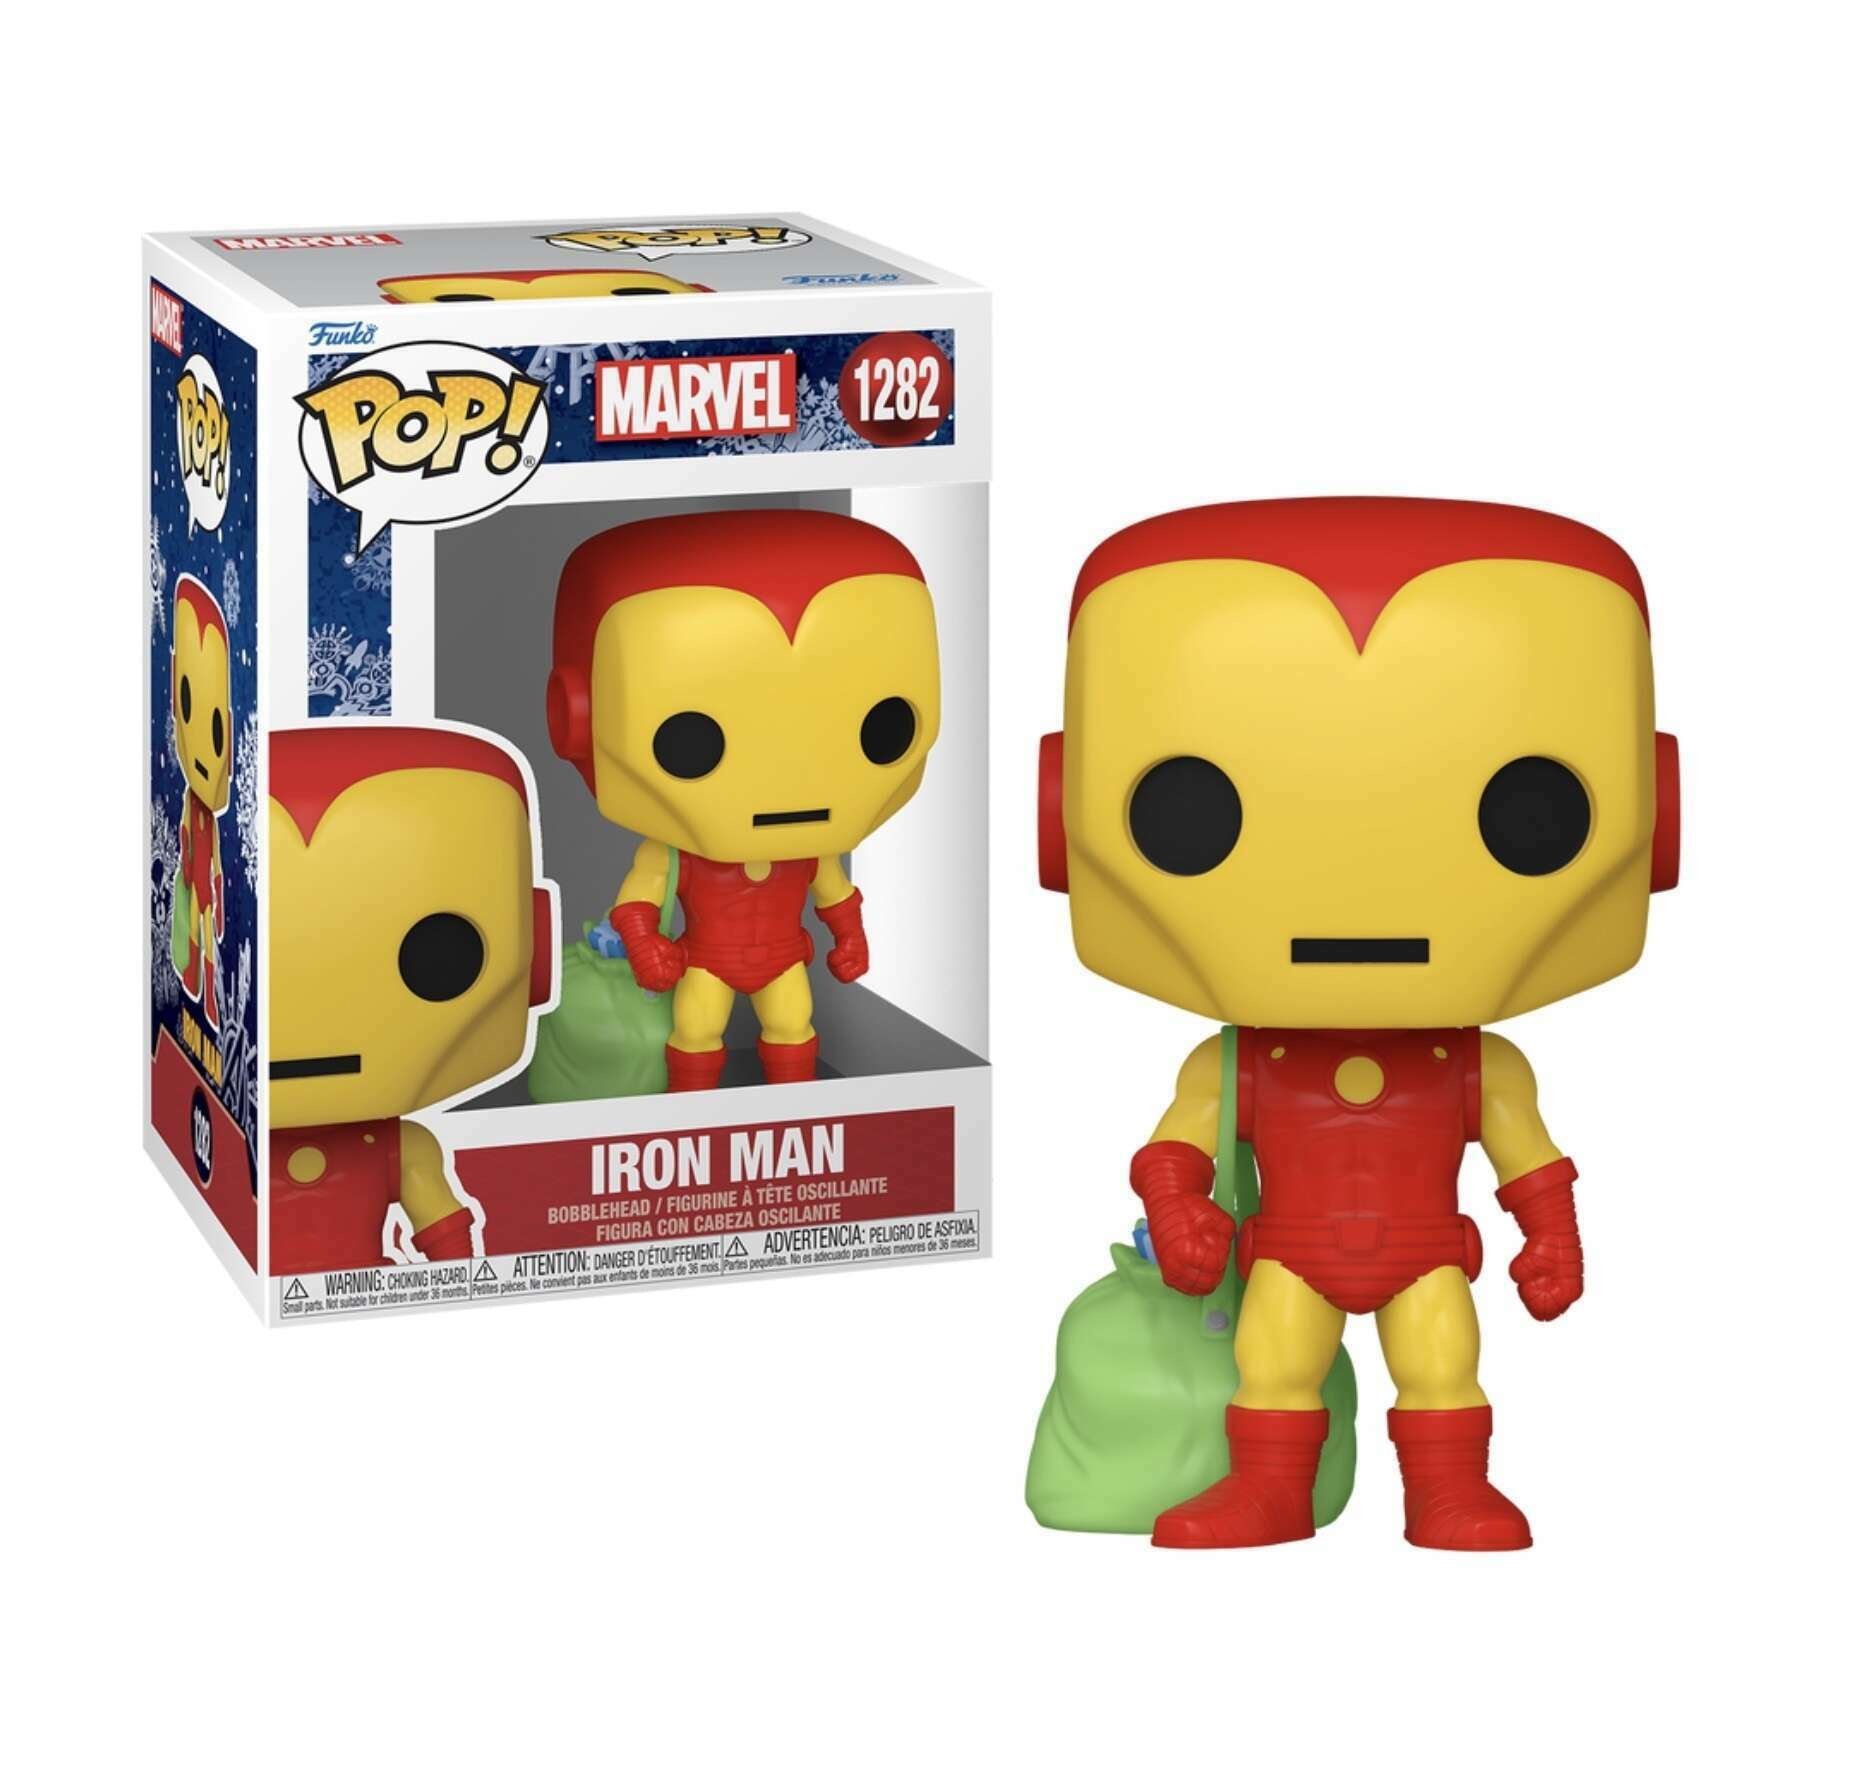 Funko POP! Marvel Holiday - Iron Man with Bag #1282 Bobble-Head Figure